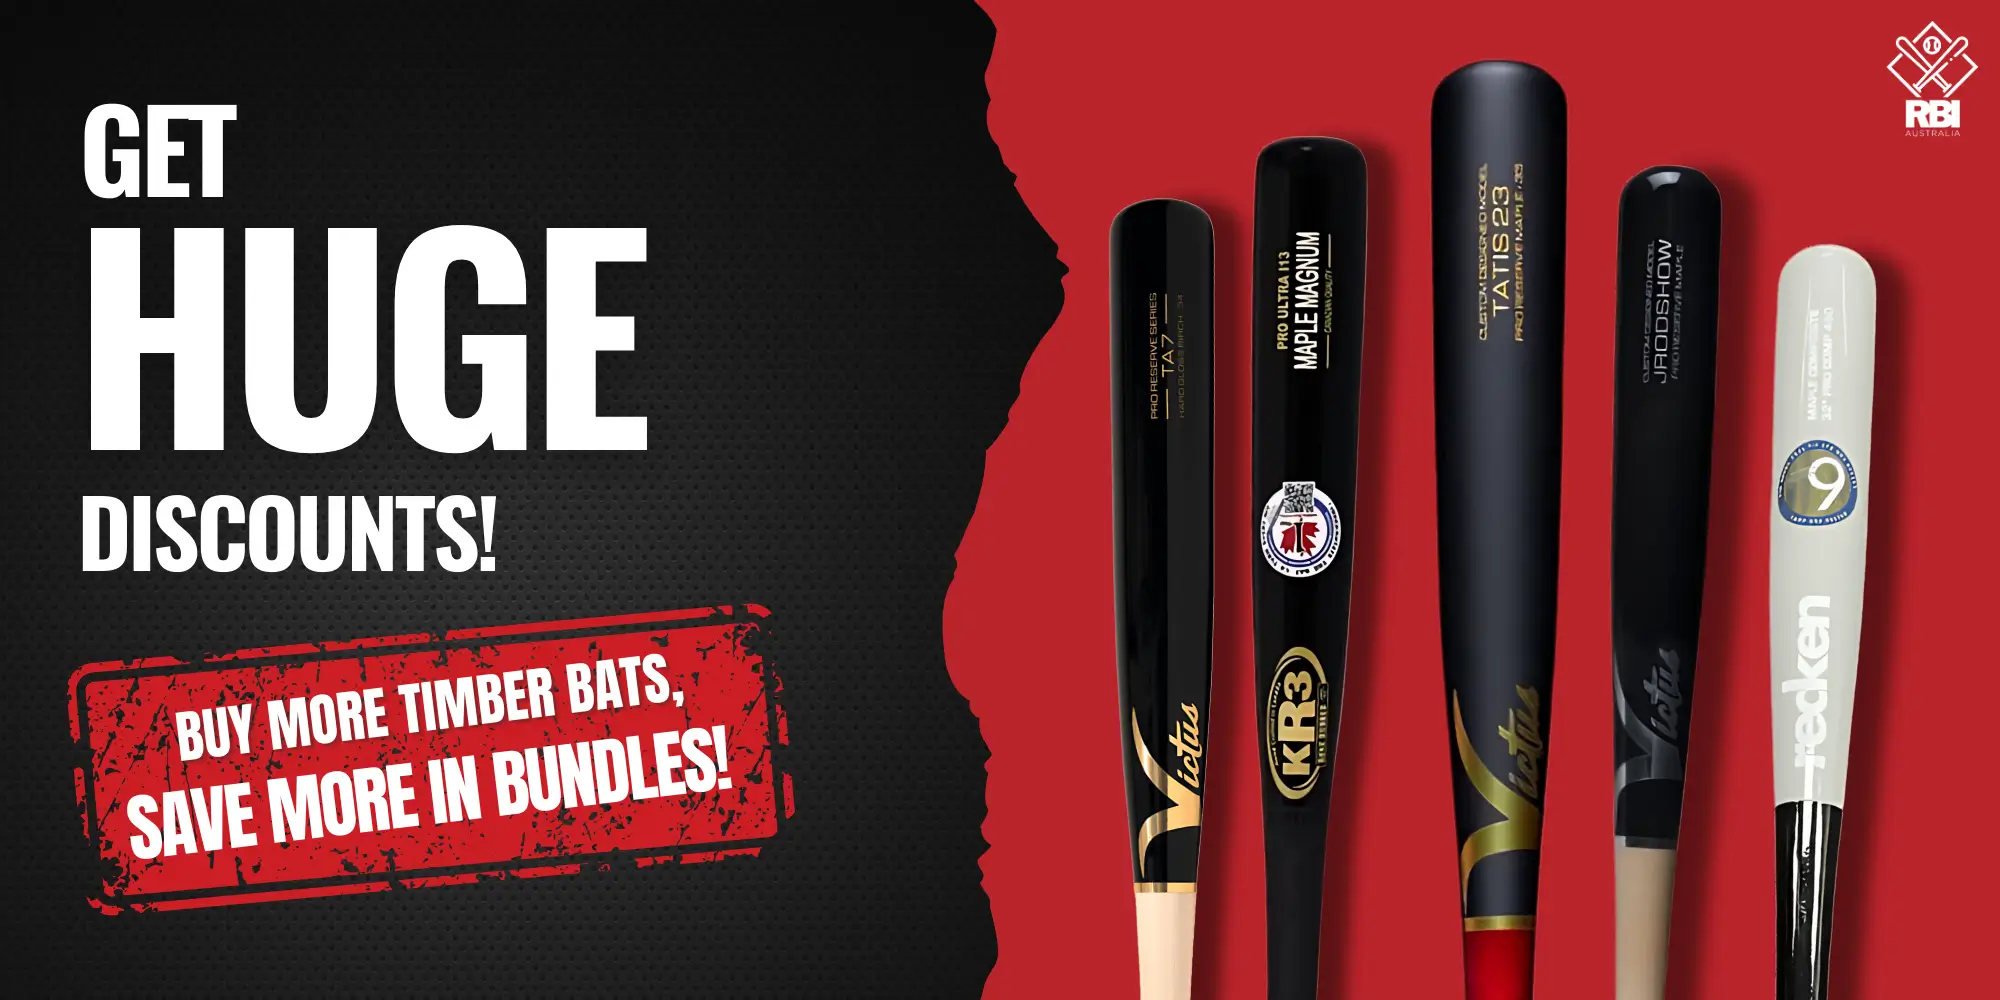 timber bats bundle discount - get huge discount when you buy more timber bats